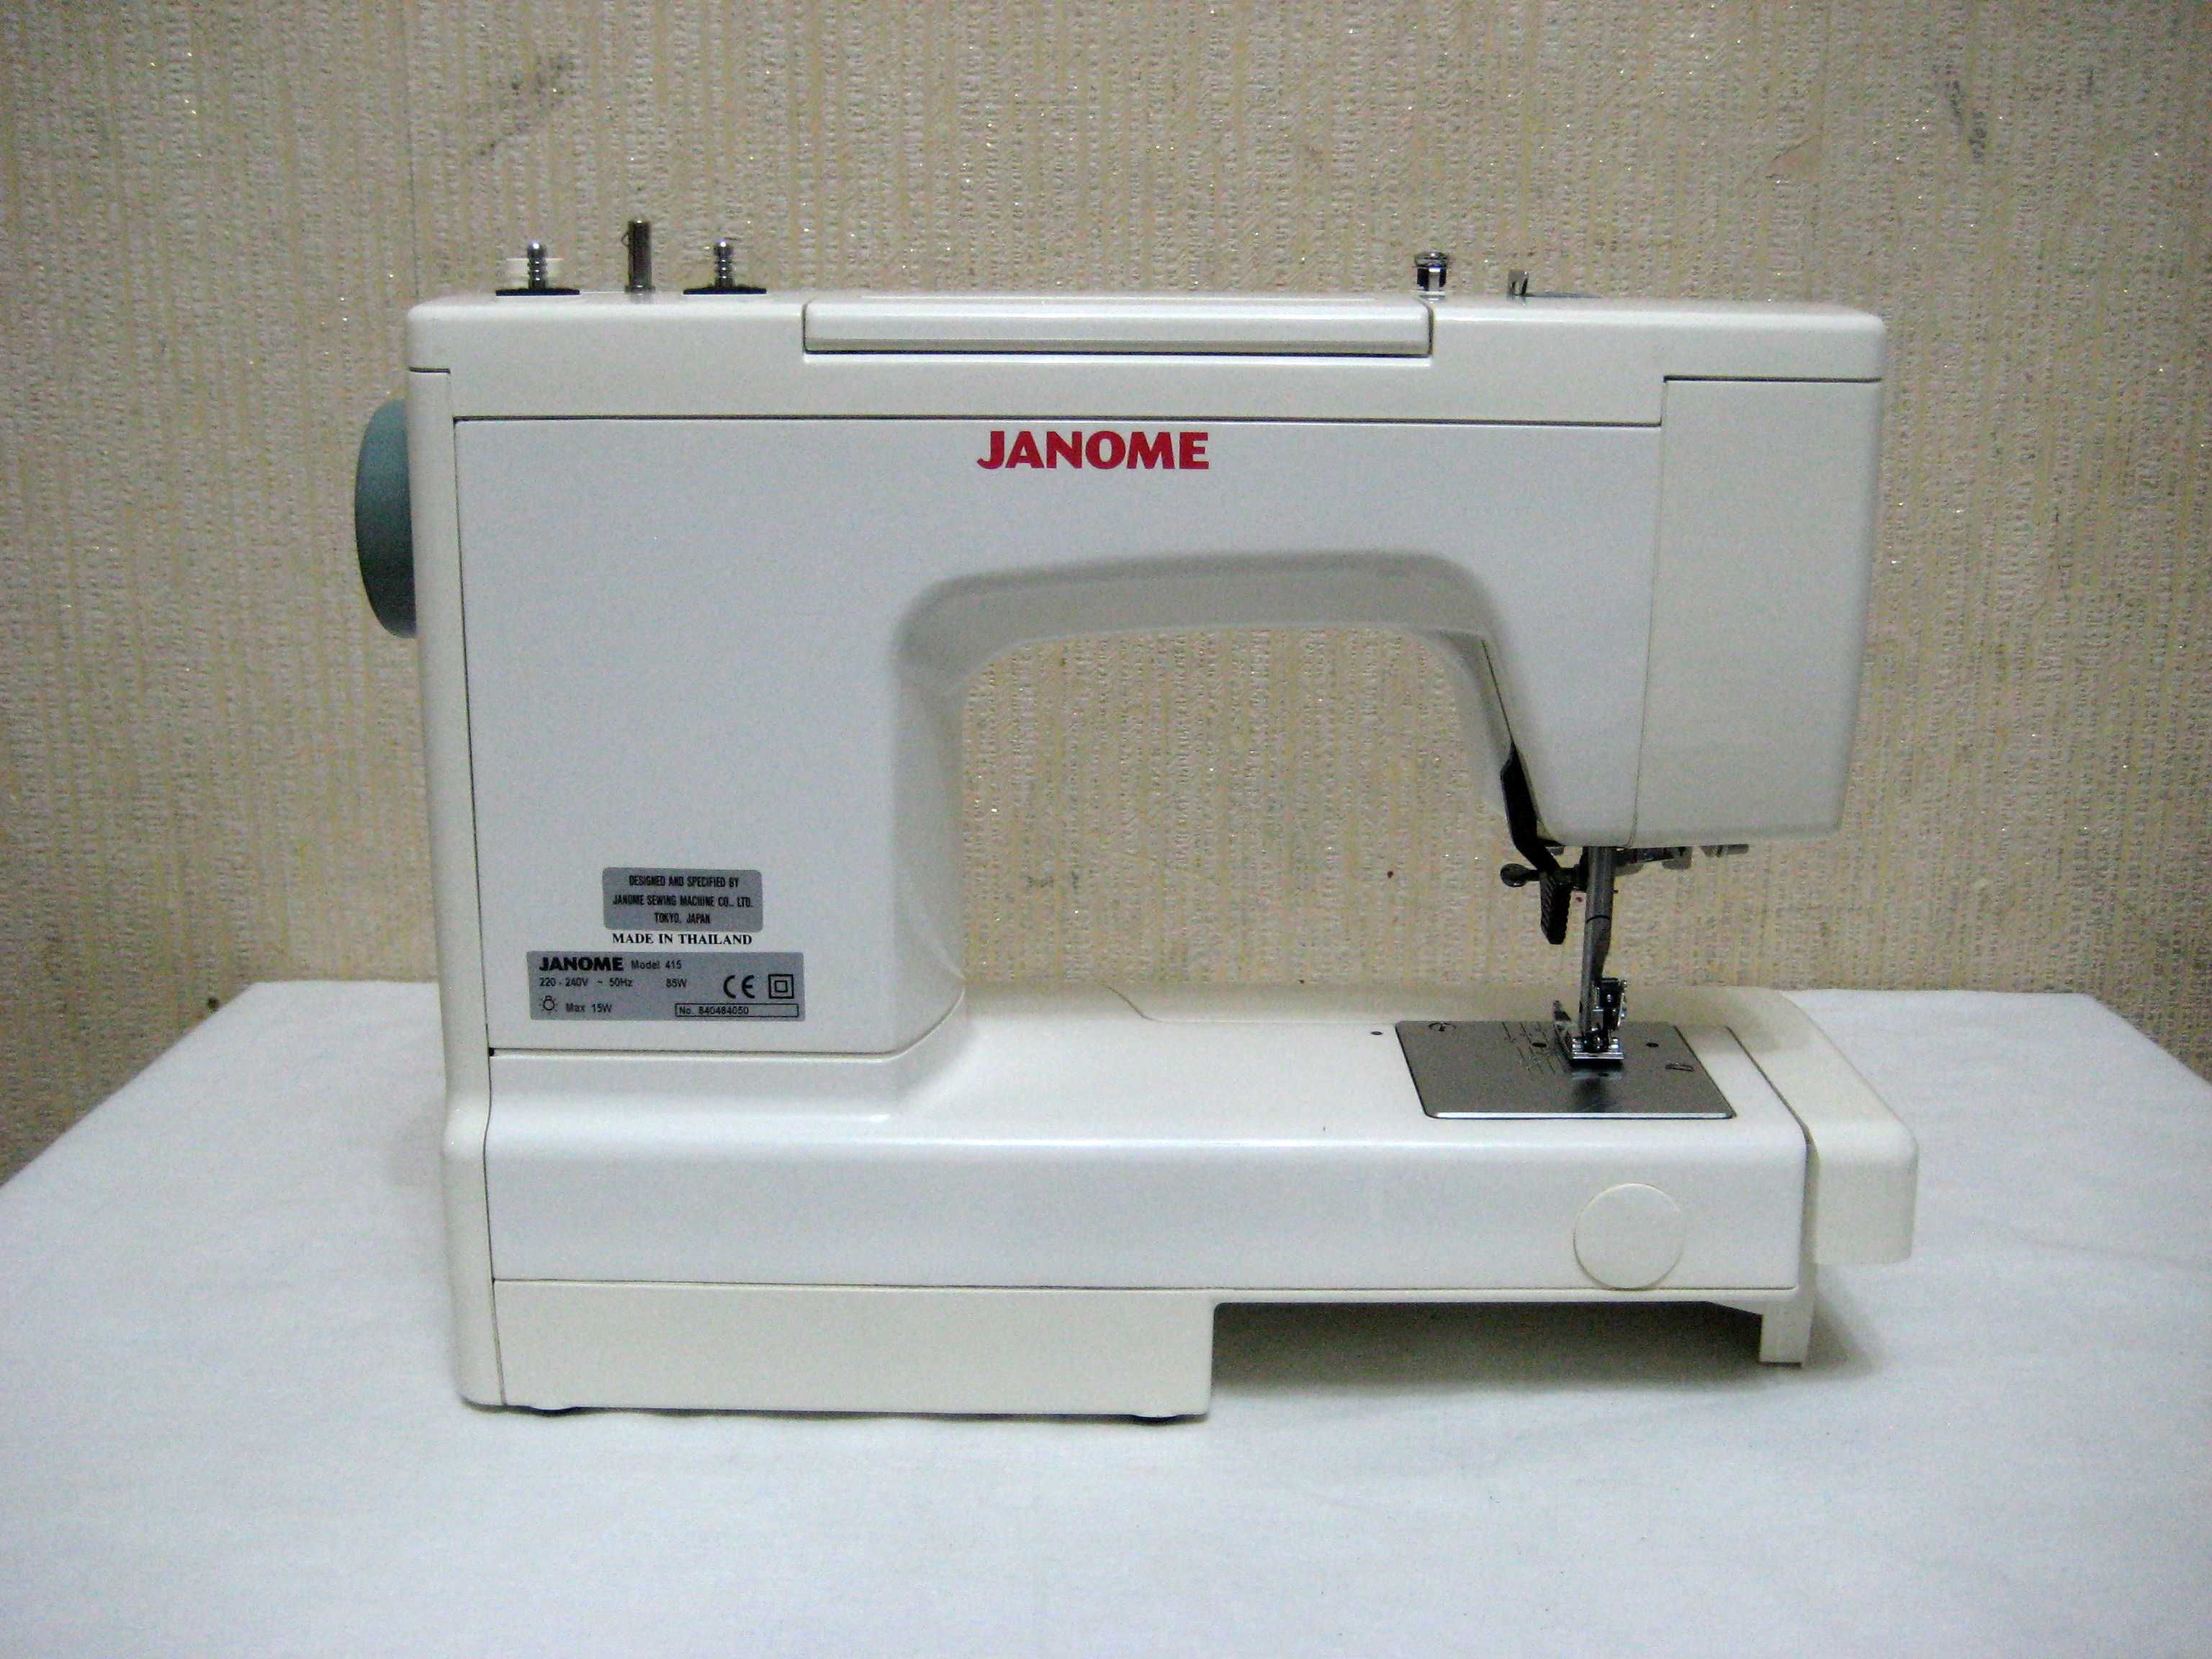 Janome415 швейный машинка оригинал Japan(made in Thailand)почти новая!